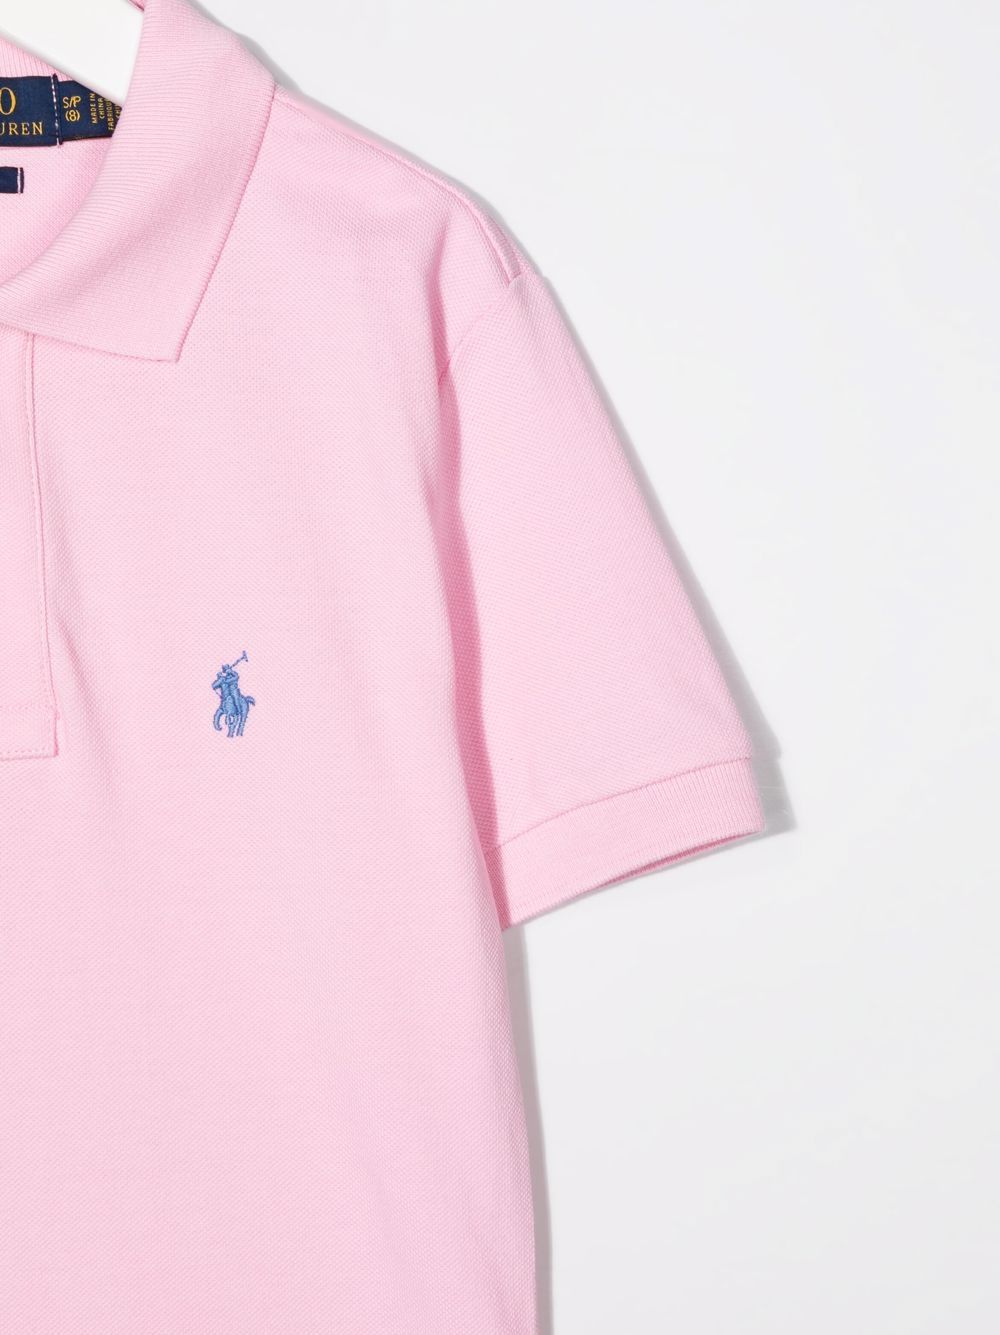 Polo shirt boy pink